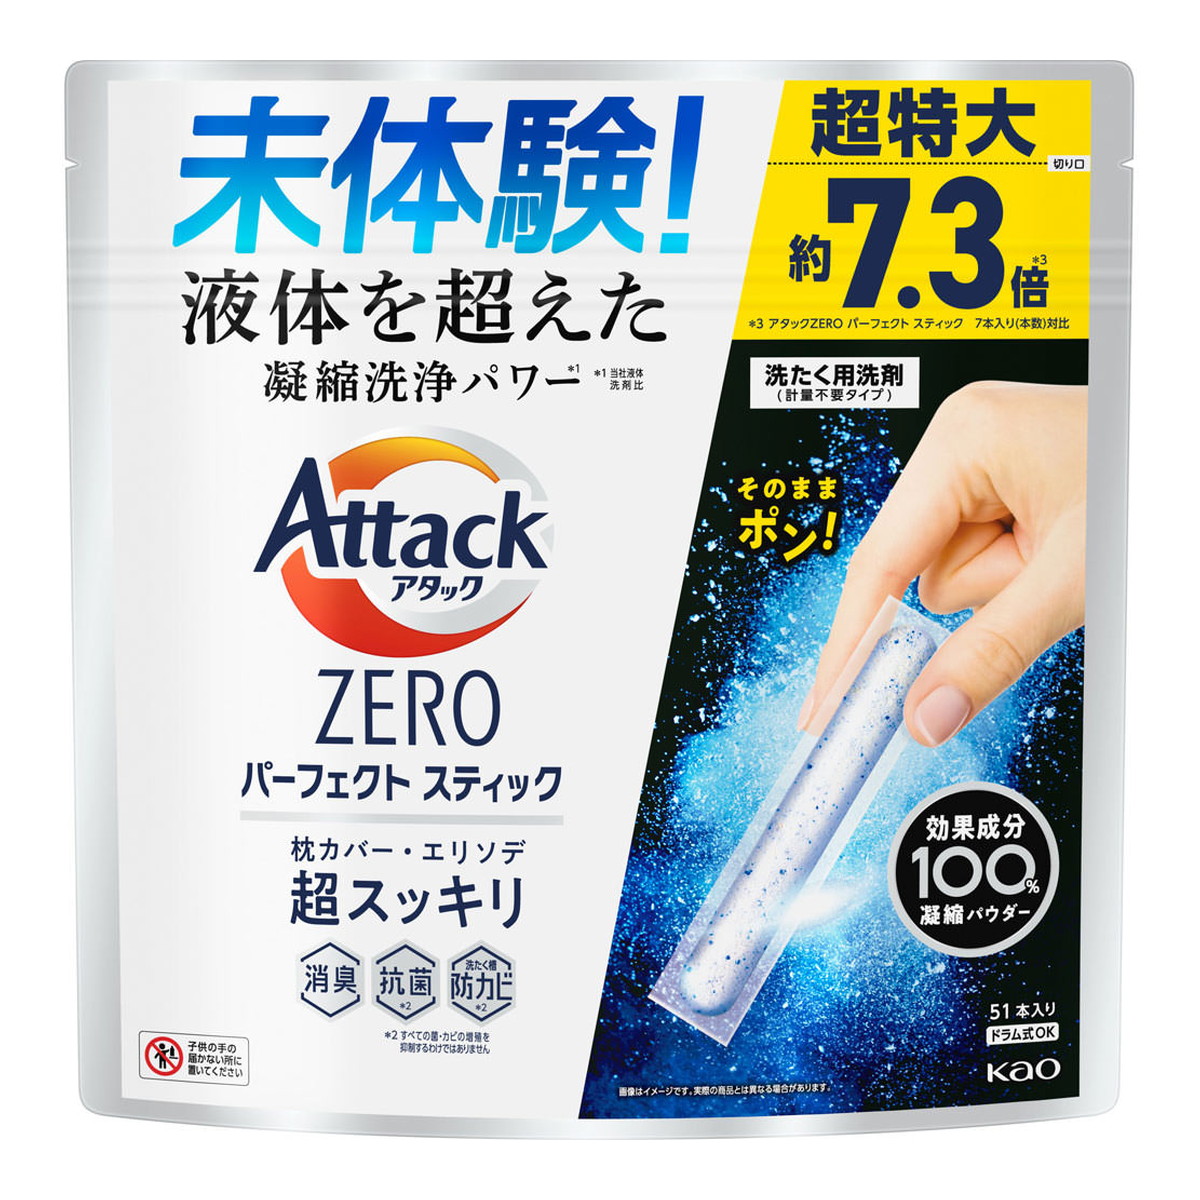 Kao アタックZERO パーフェクトスティック 51本入り×8セット アタック 粉末洗剤の商品画像